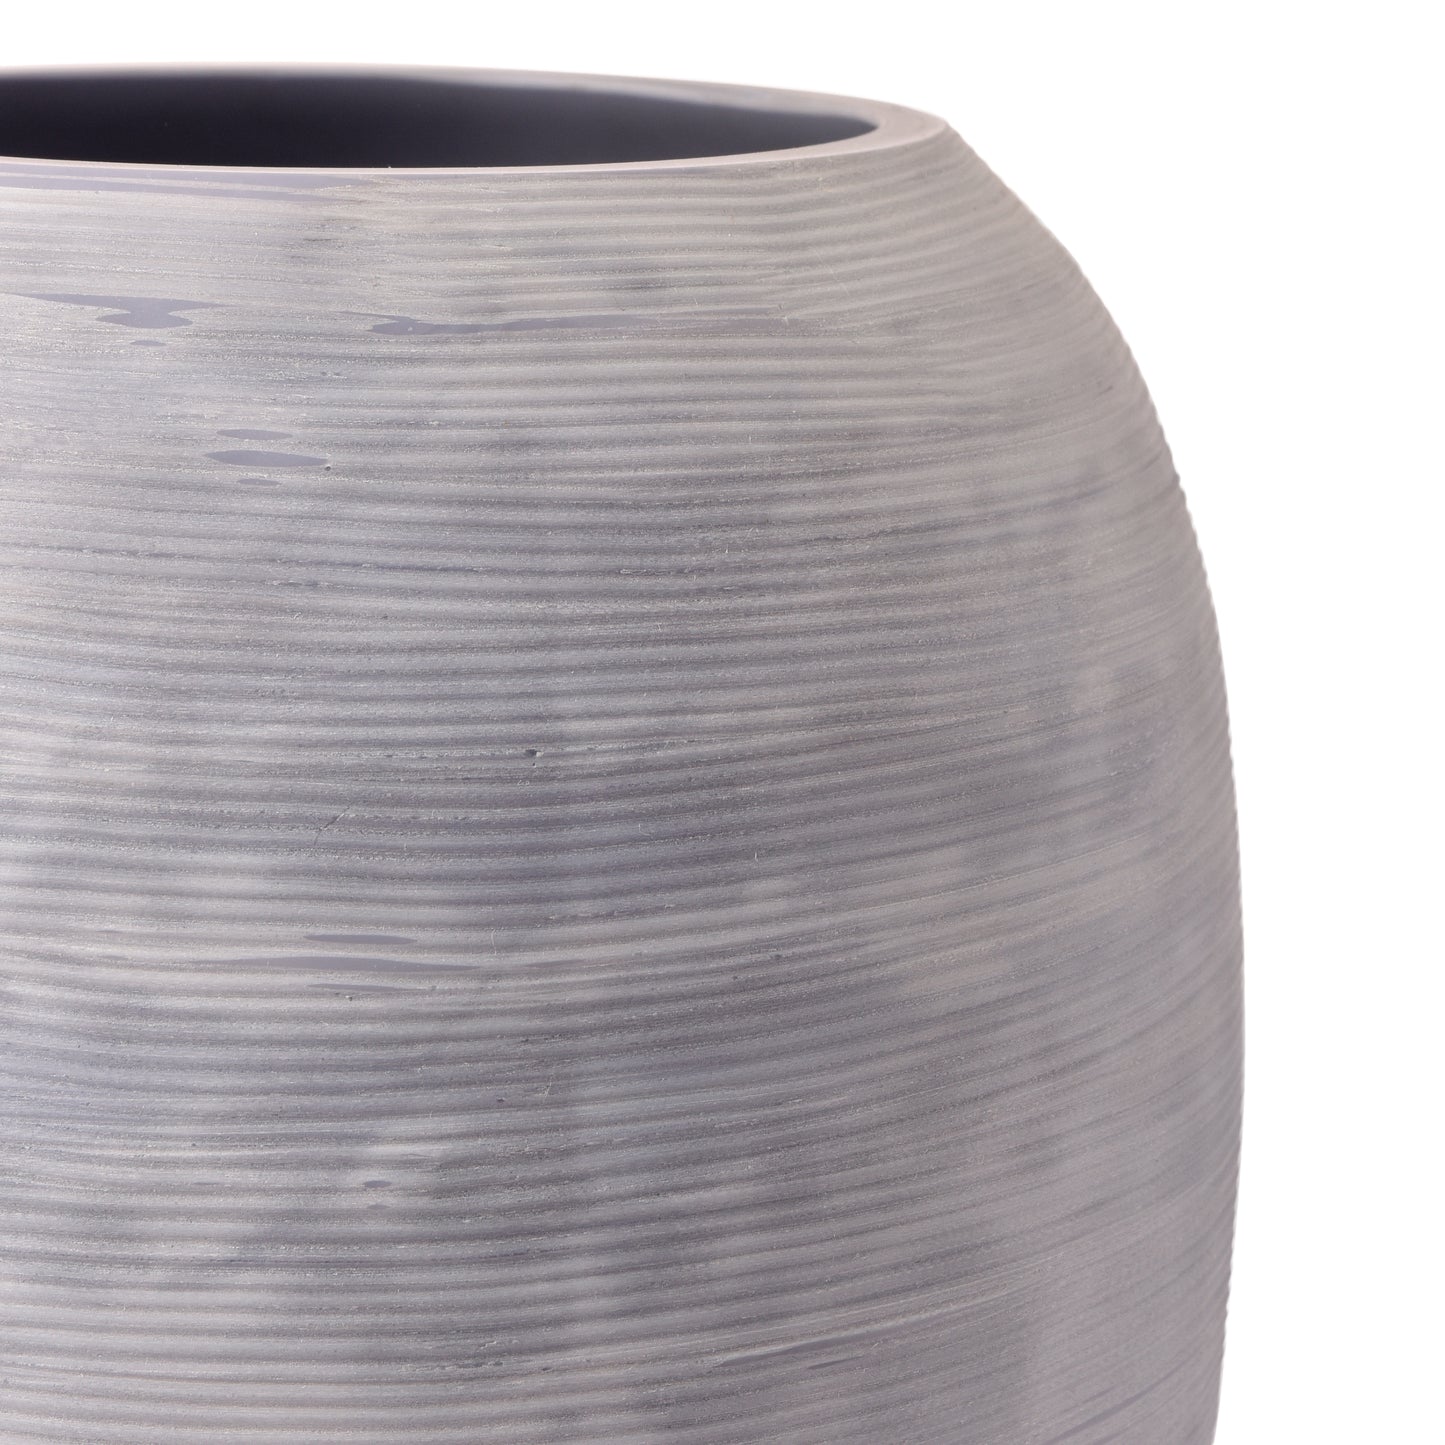 Round Stone Vase/Pot-HOMENEARTH